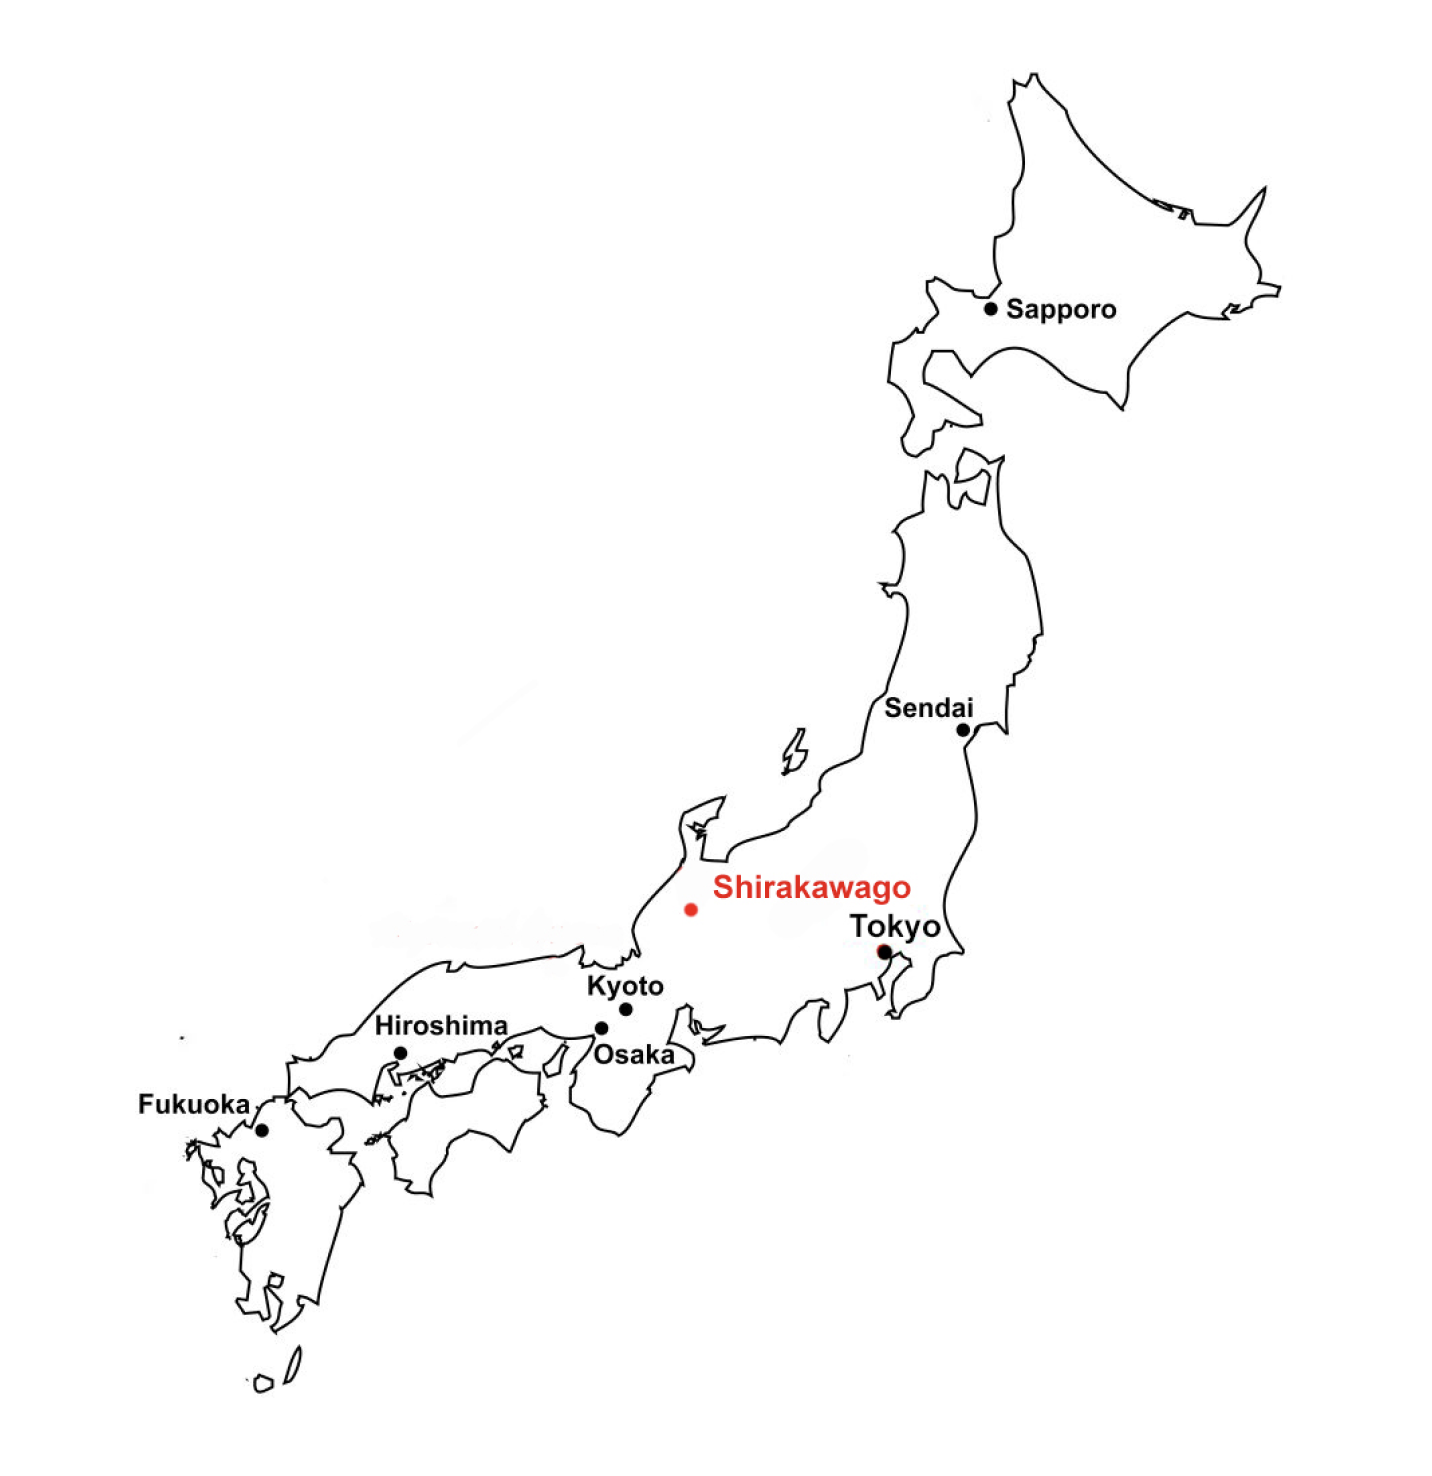 Map of Japan with Shirakawa-go position